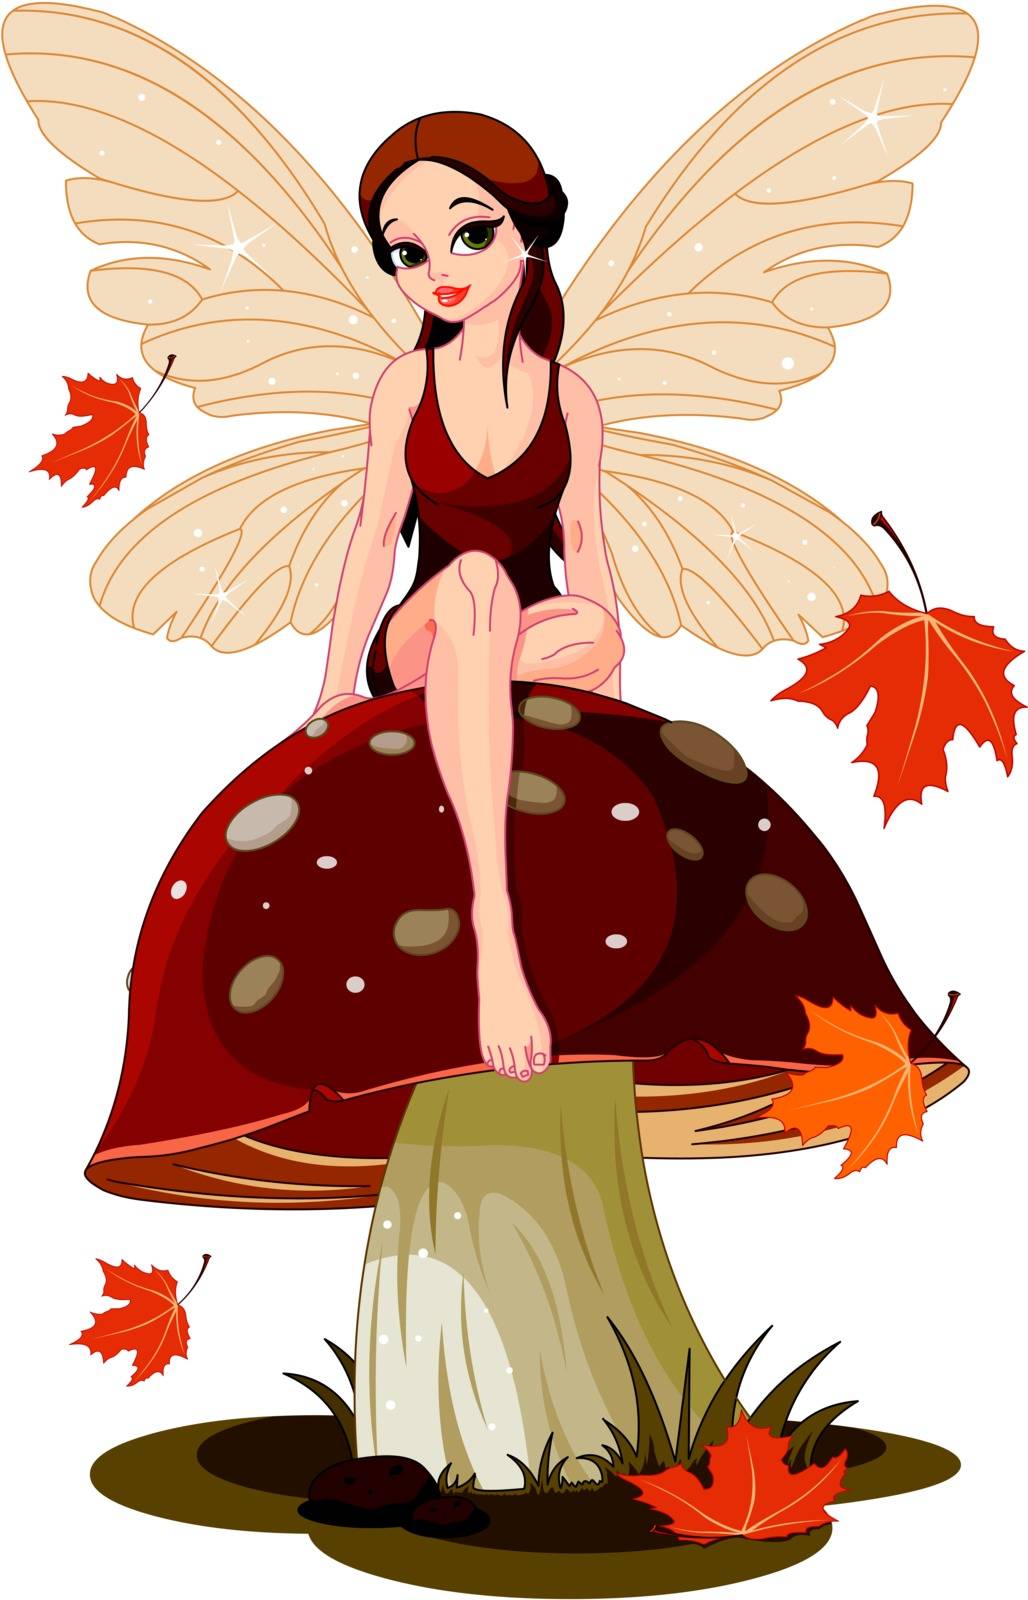 Autumn Fairy on the Mushroom by Dazdraperma